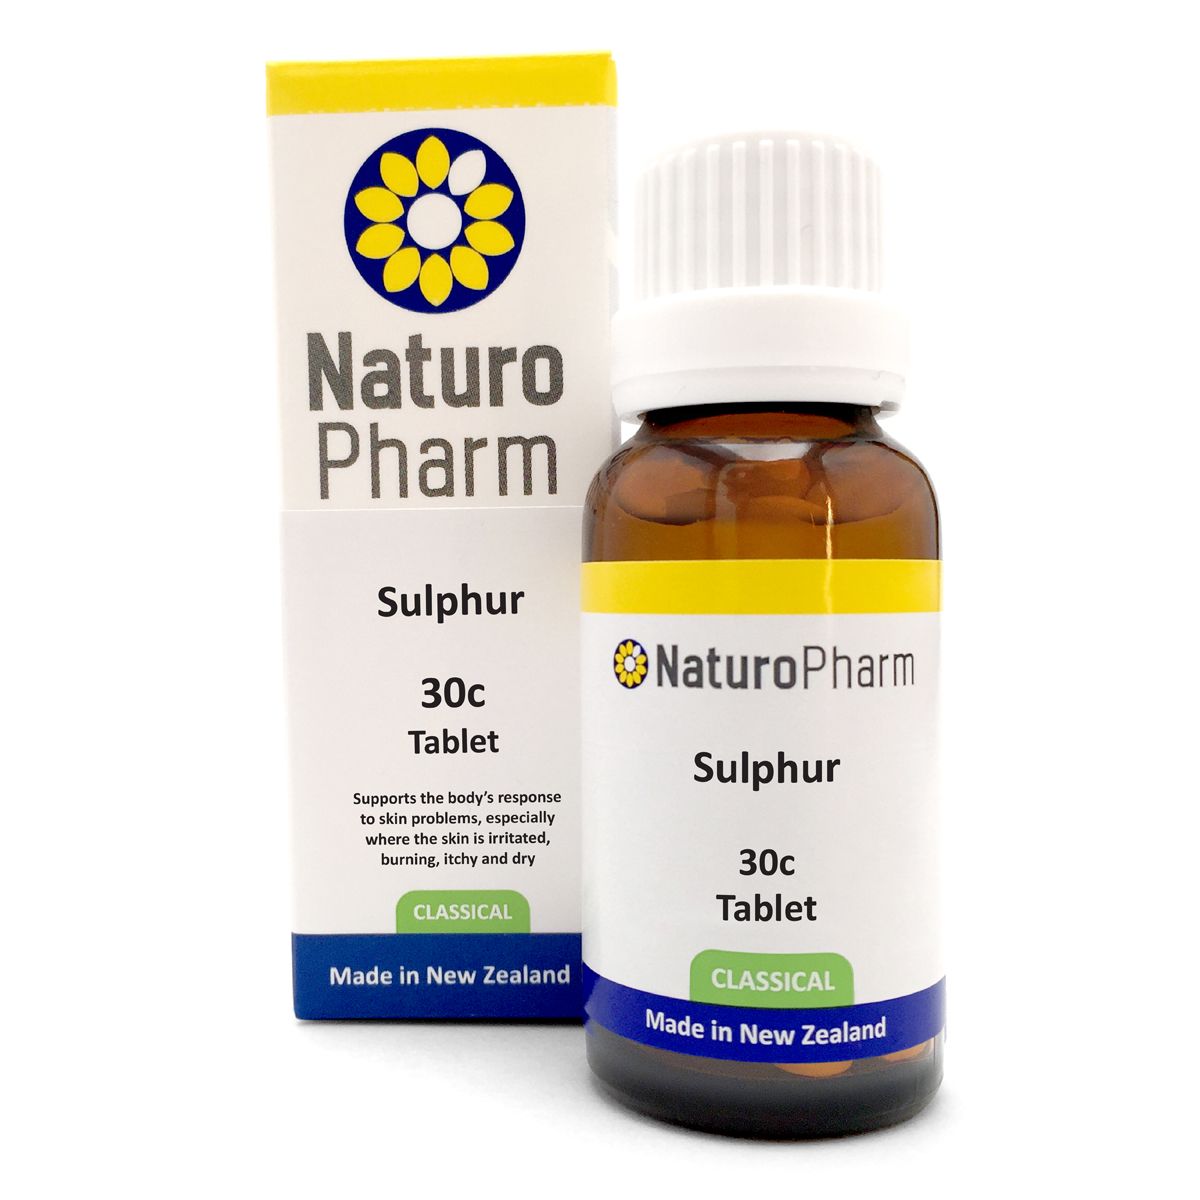 Naturo Pharm Sulphur 30c tablet